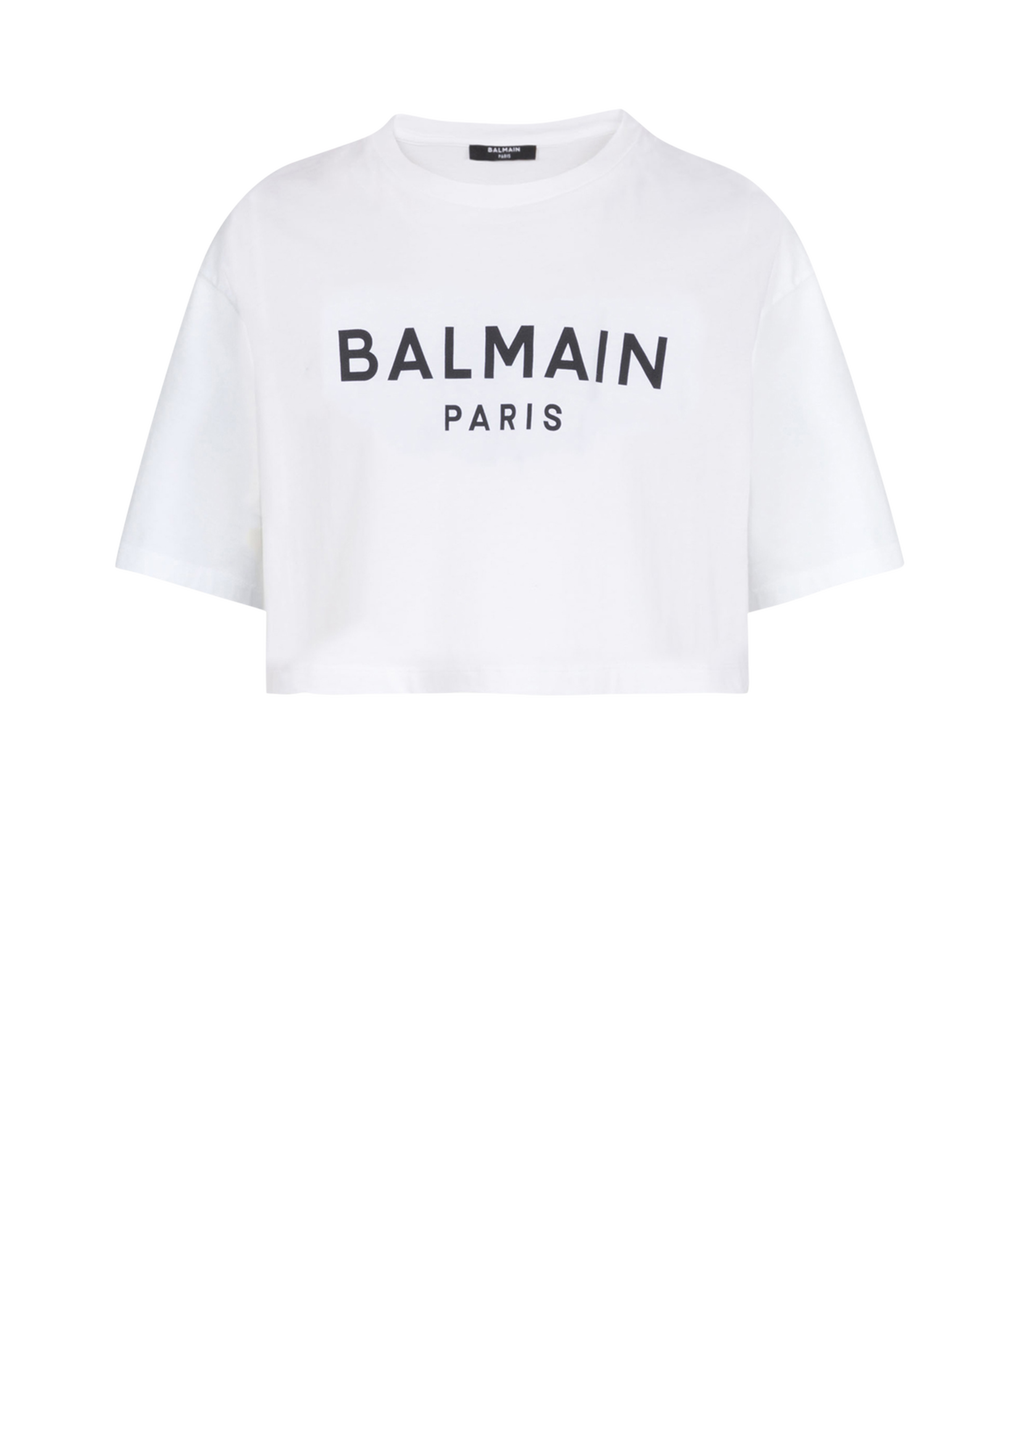 T-shirt court en coton imprimé logo Balmain, blanc, hi-res